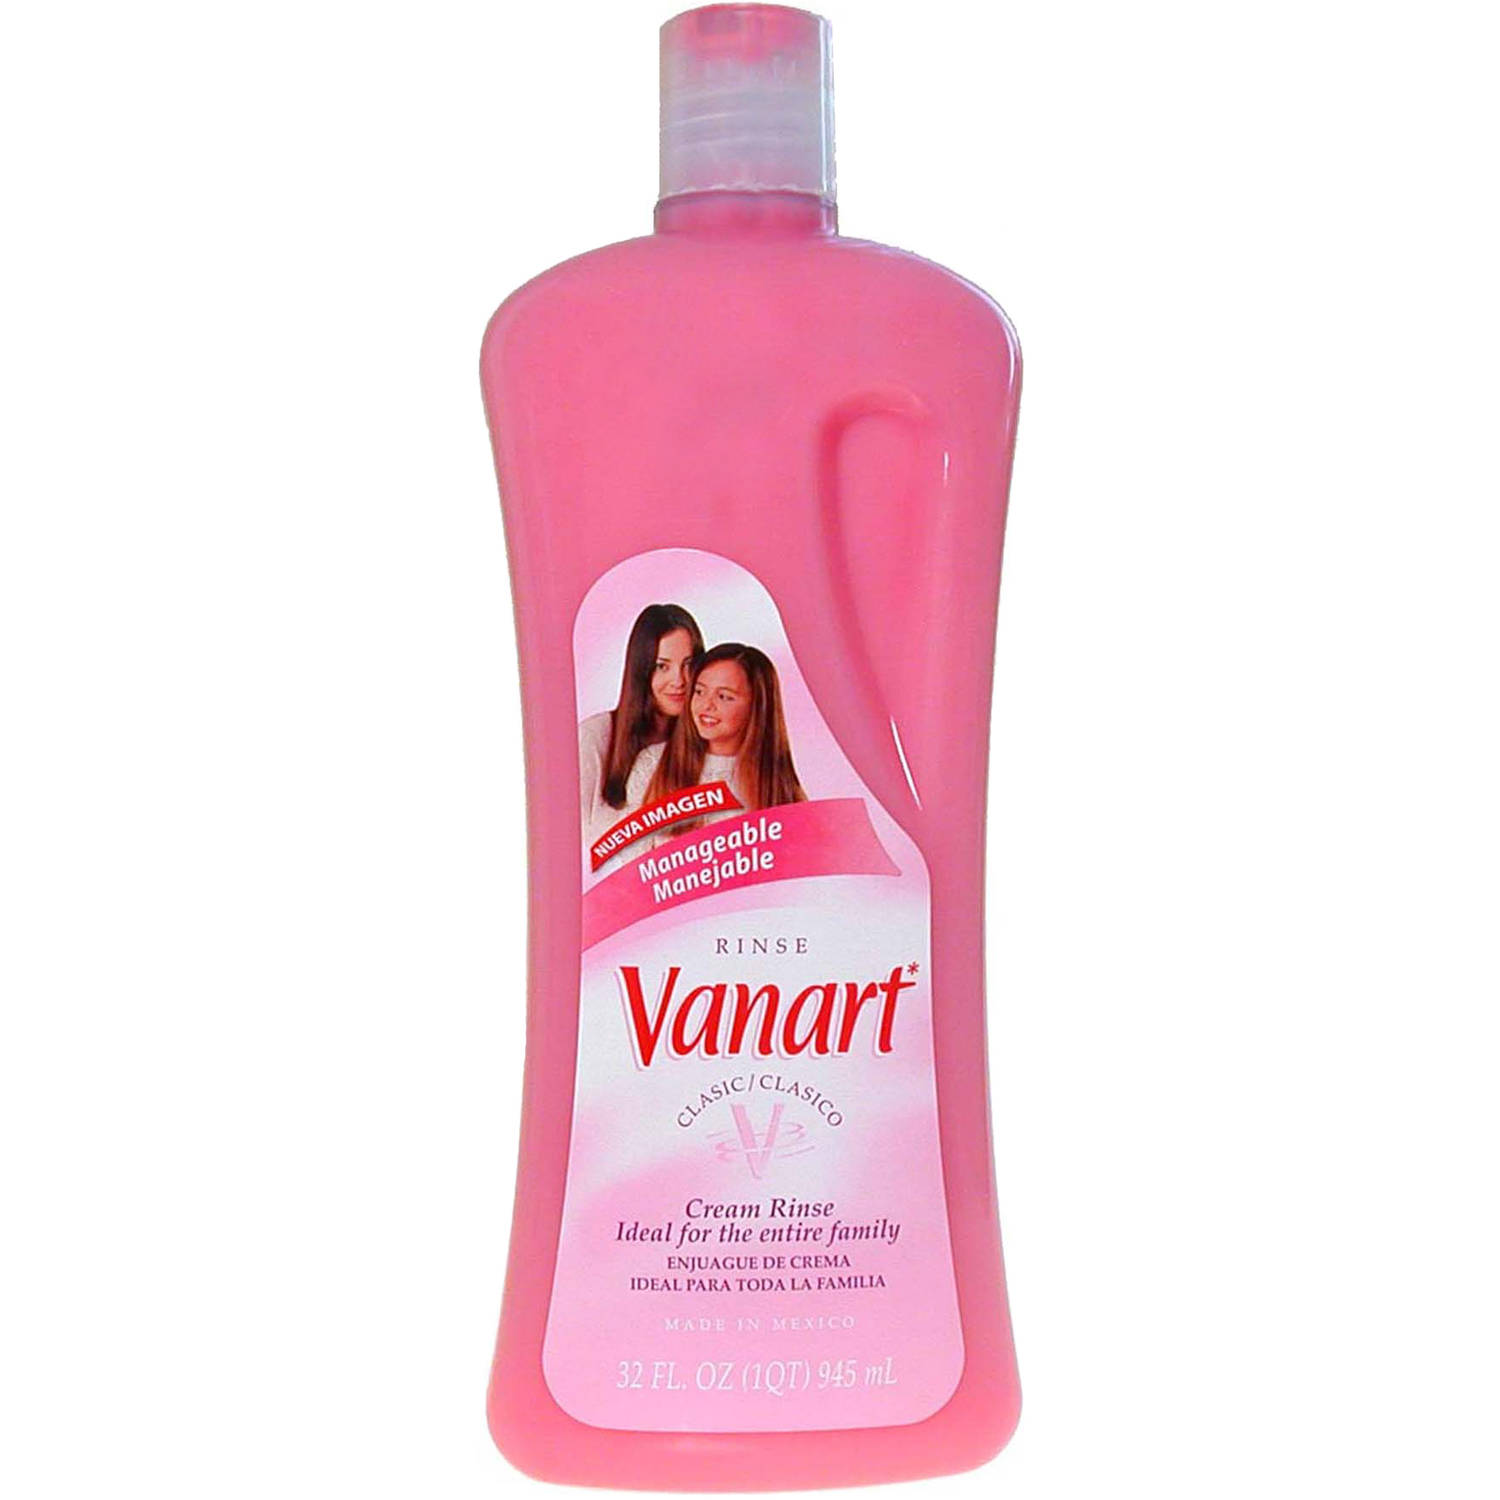 Vanart Cream Rinse, 32 fl oz.